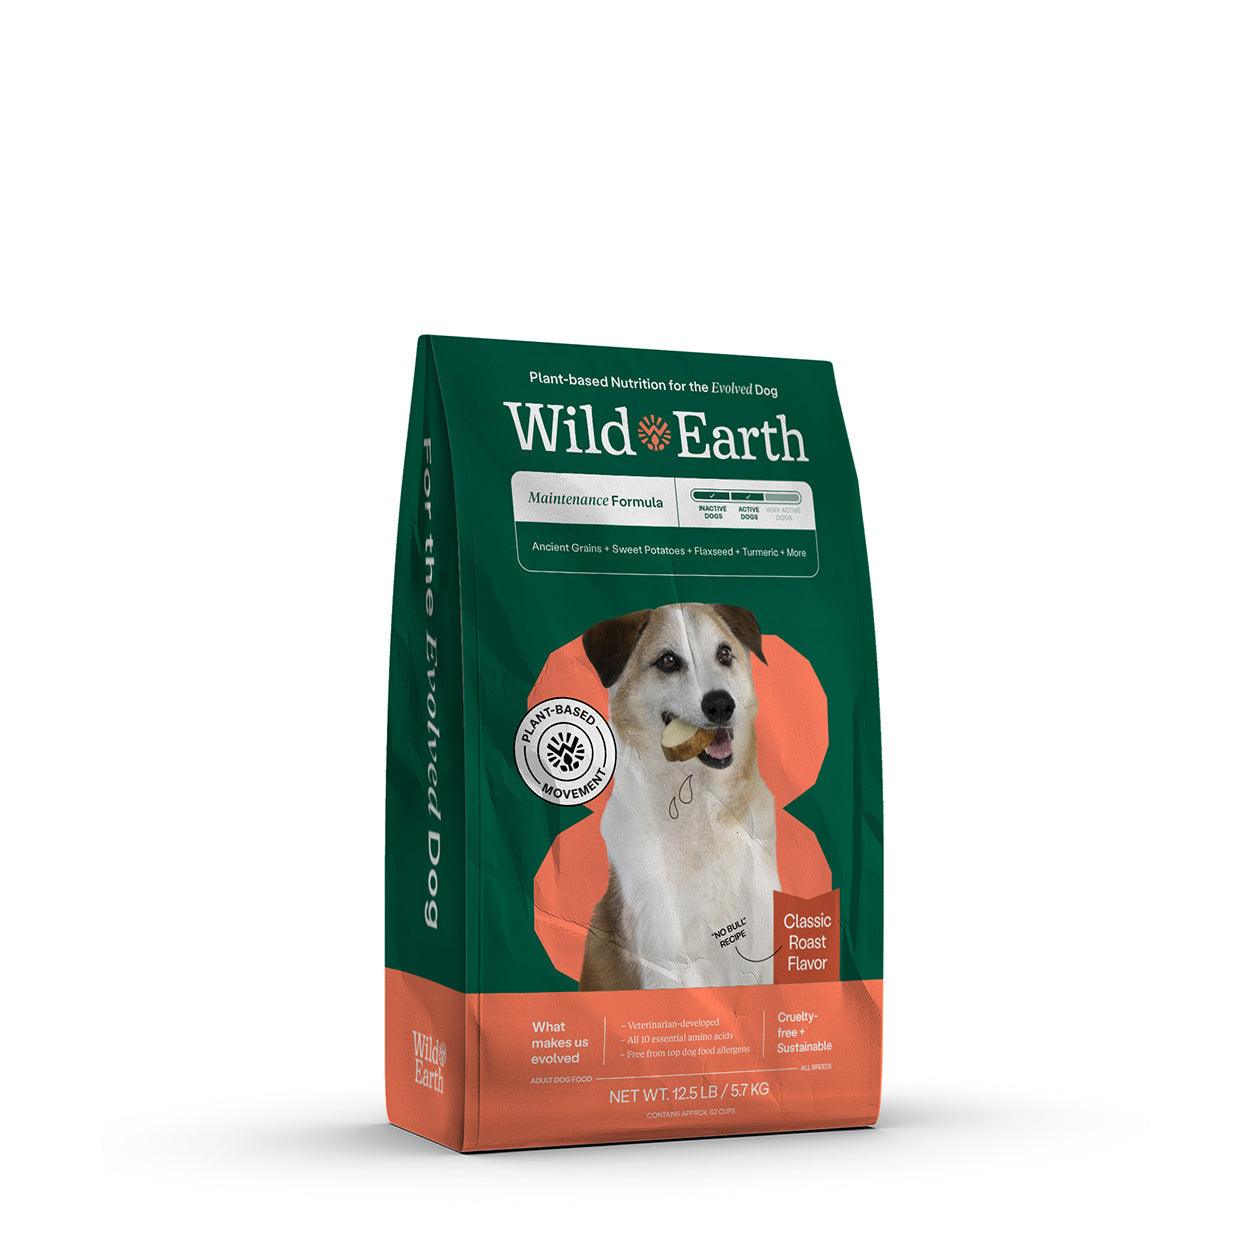 Maintenance Formula Dog Food by Wild Earth - The Hammer Sports